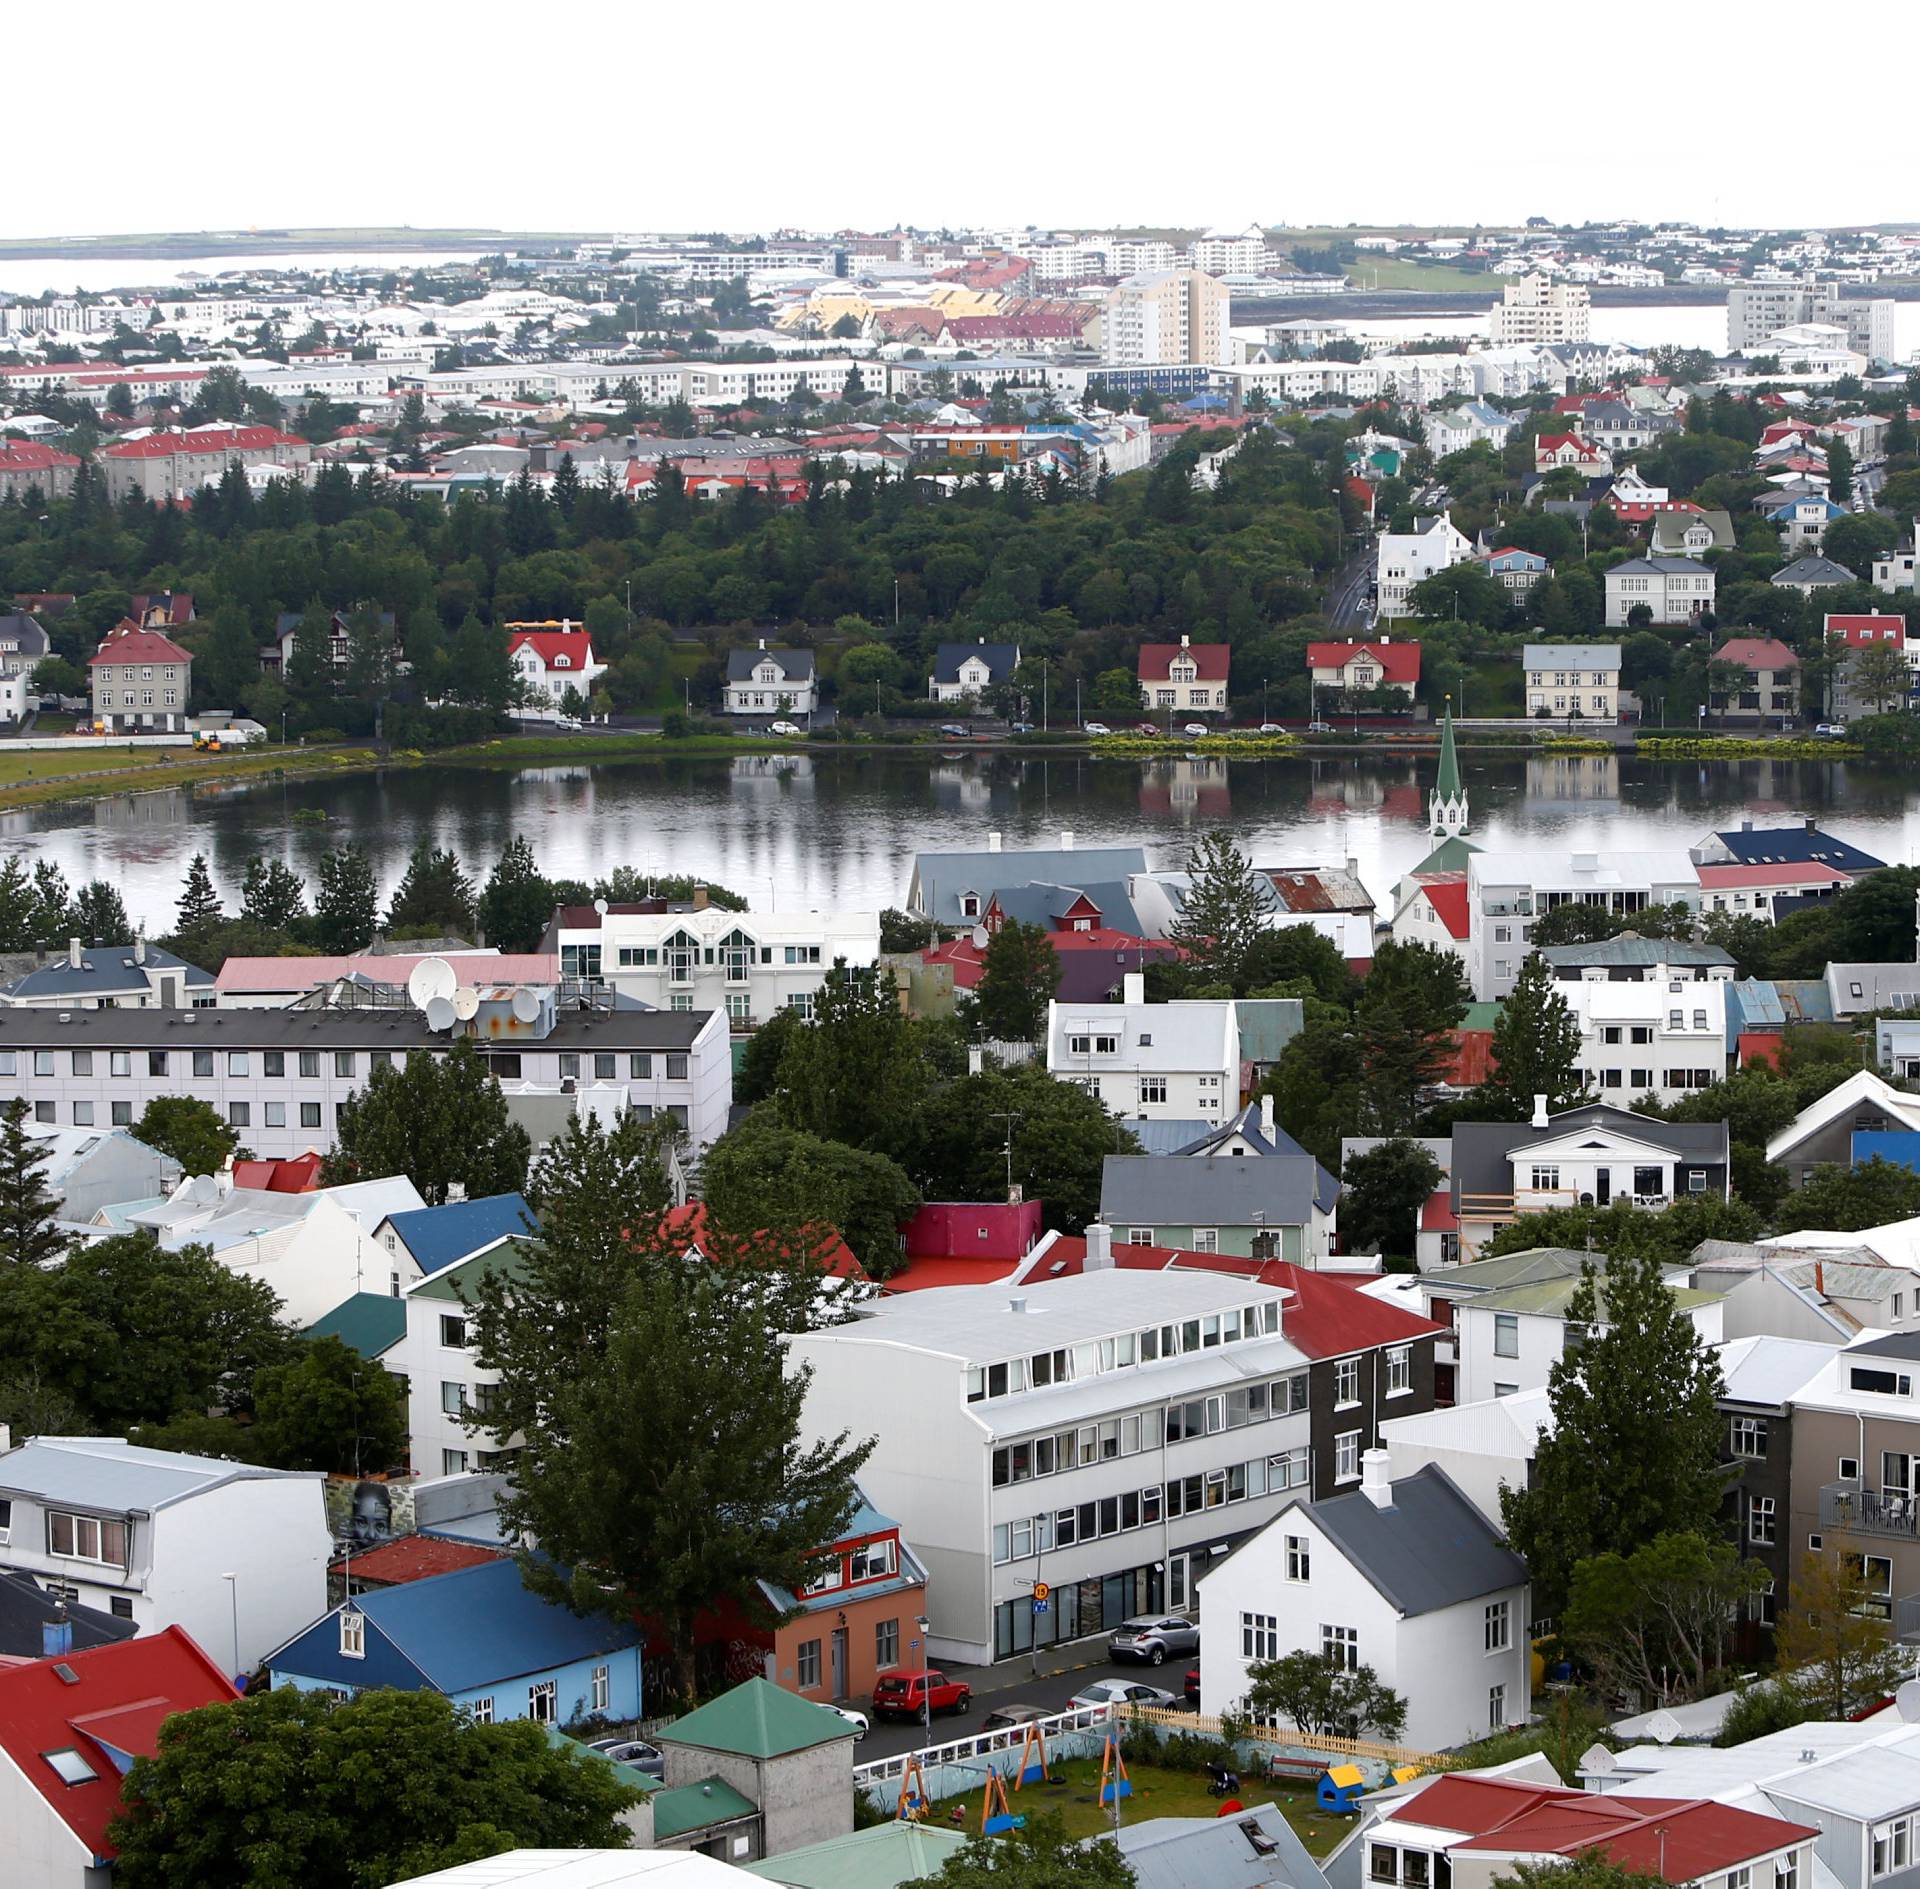 General view shows city of Reykjavik, seen from Hallgrimskirkja church